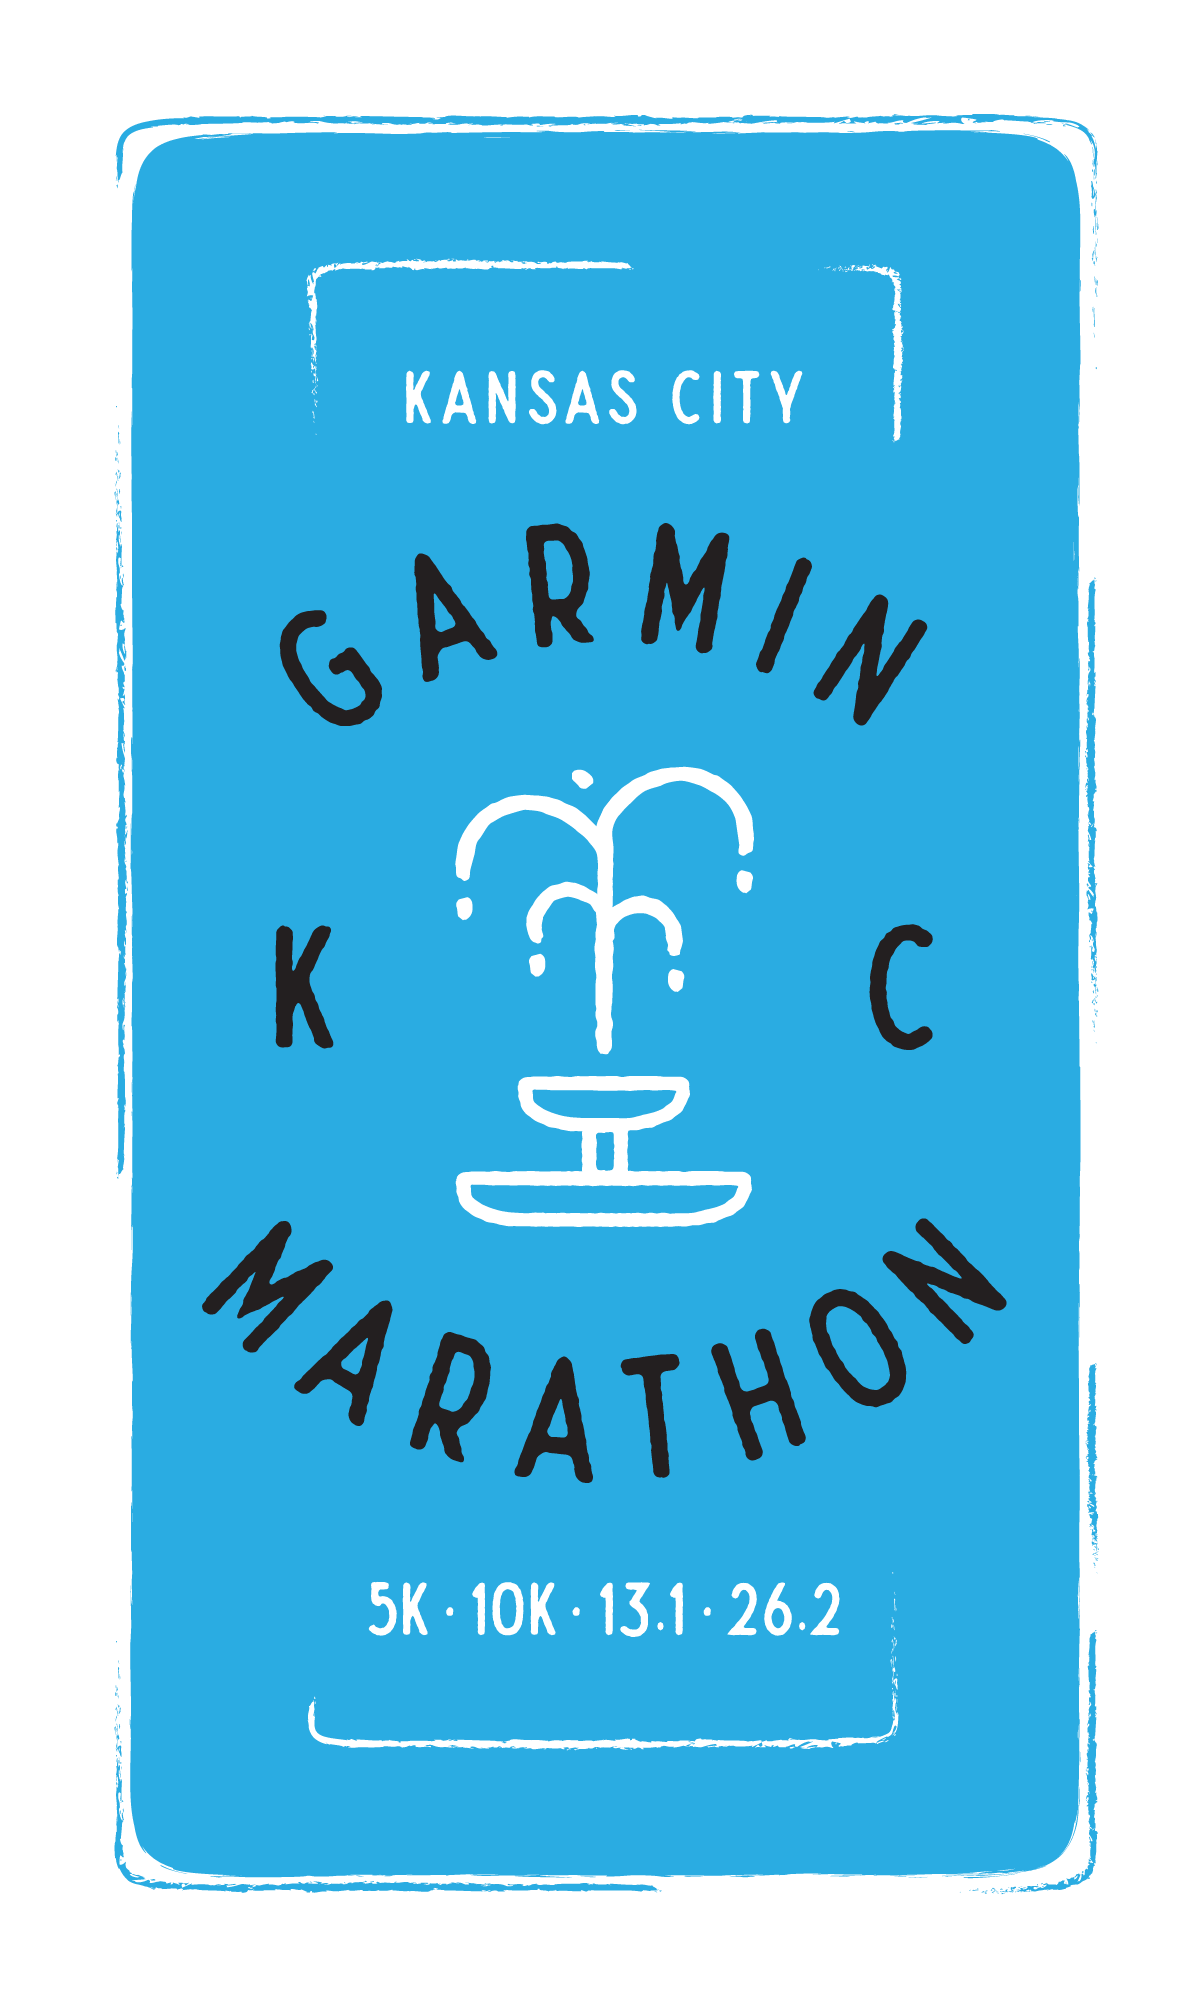 Garmin Kansas City Marathon